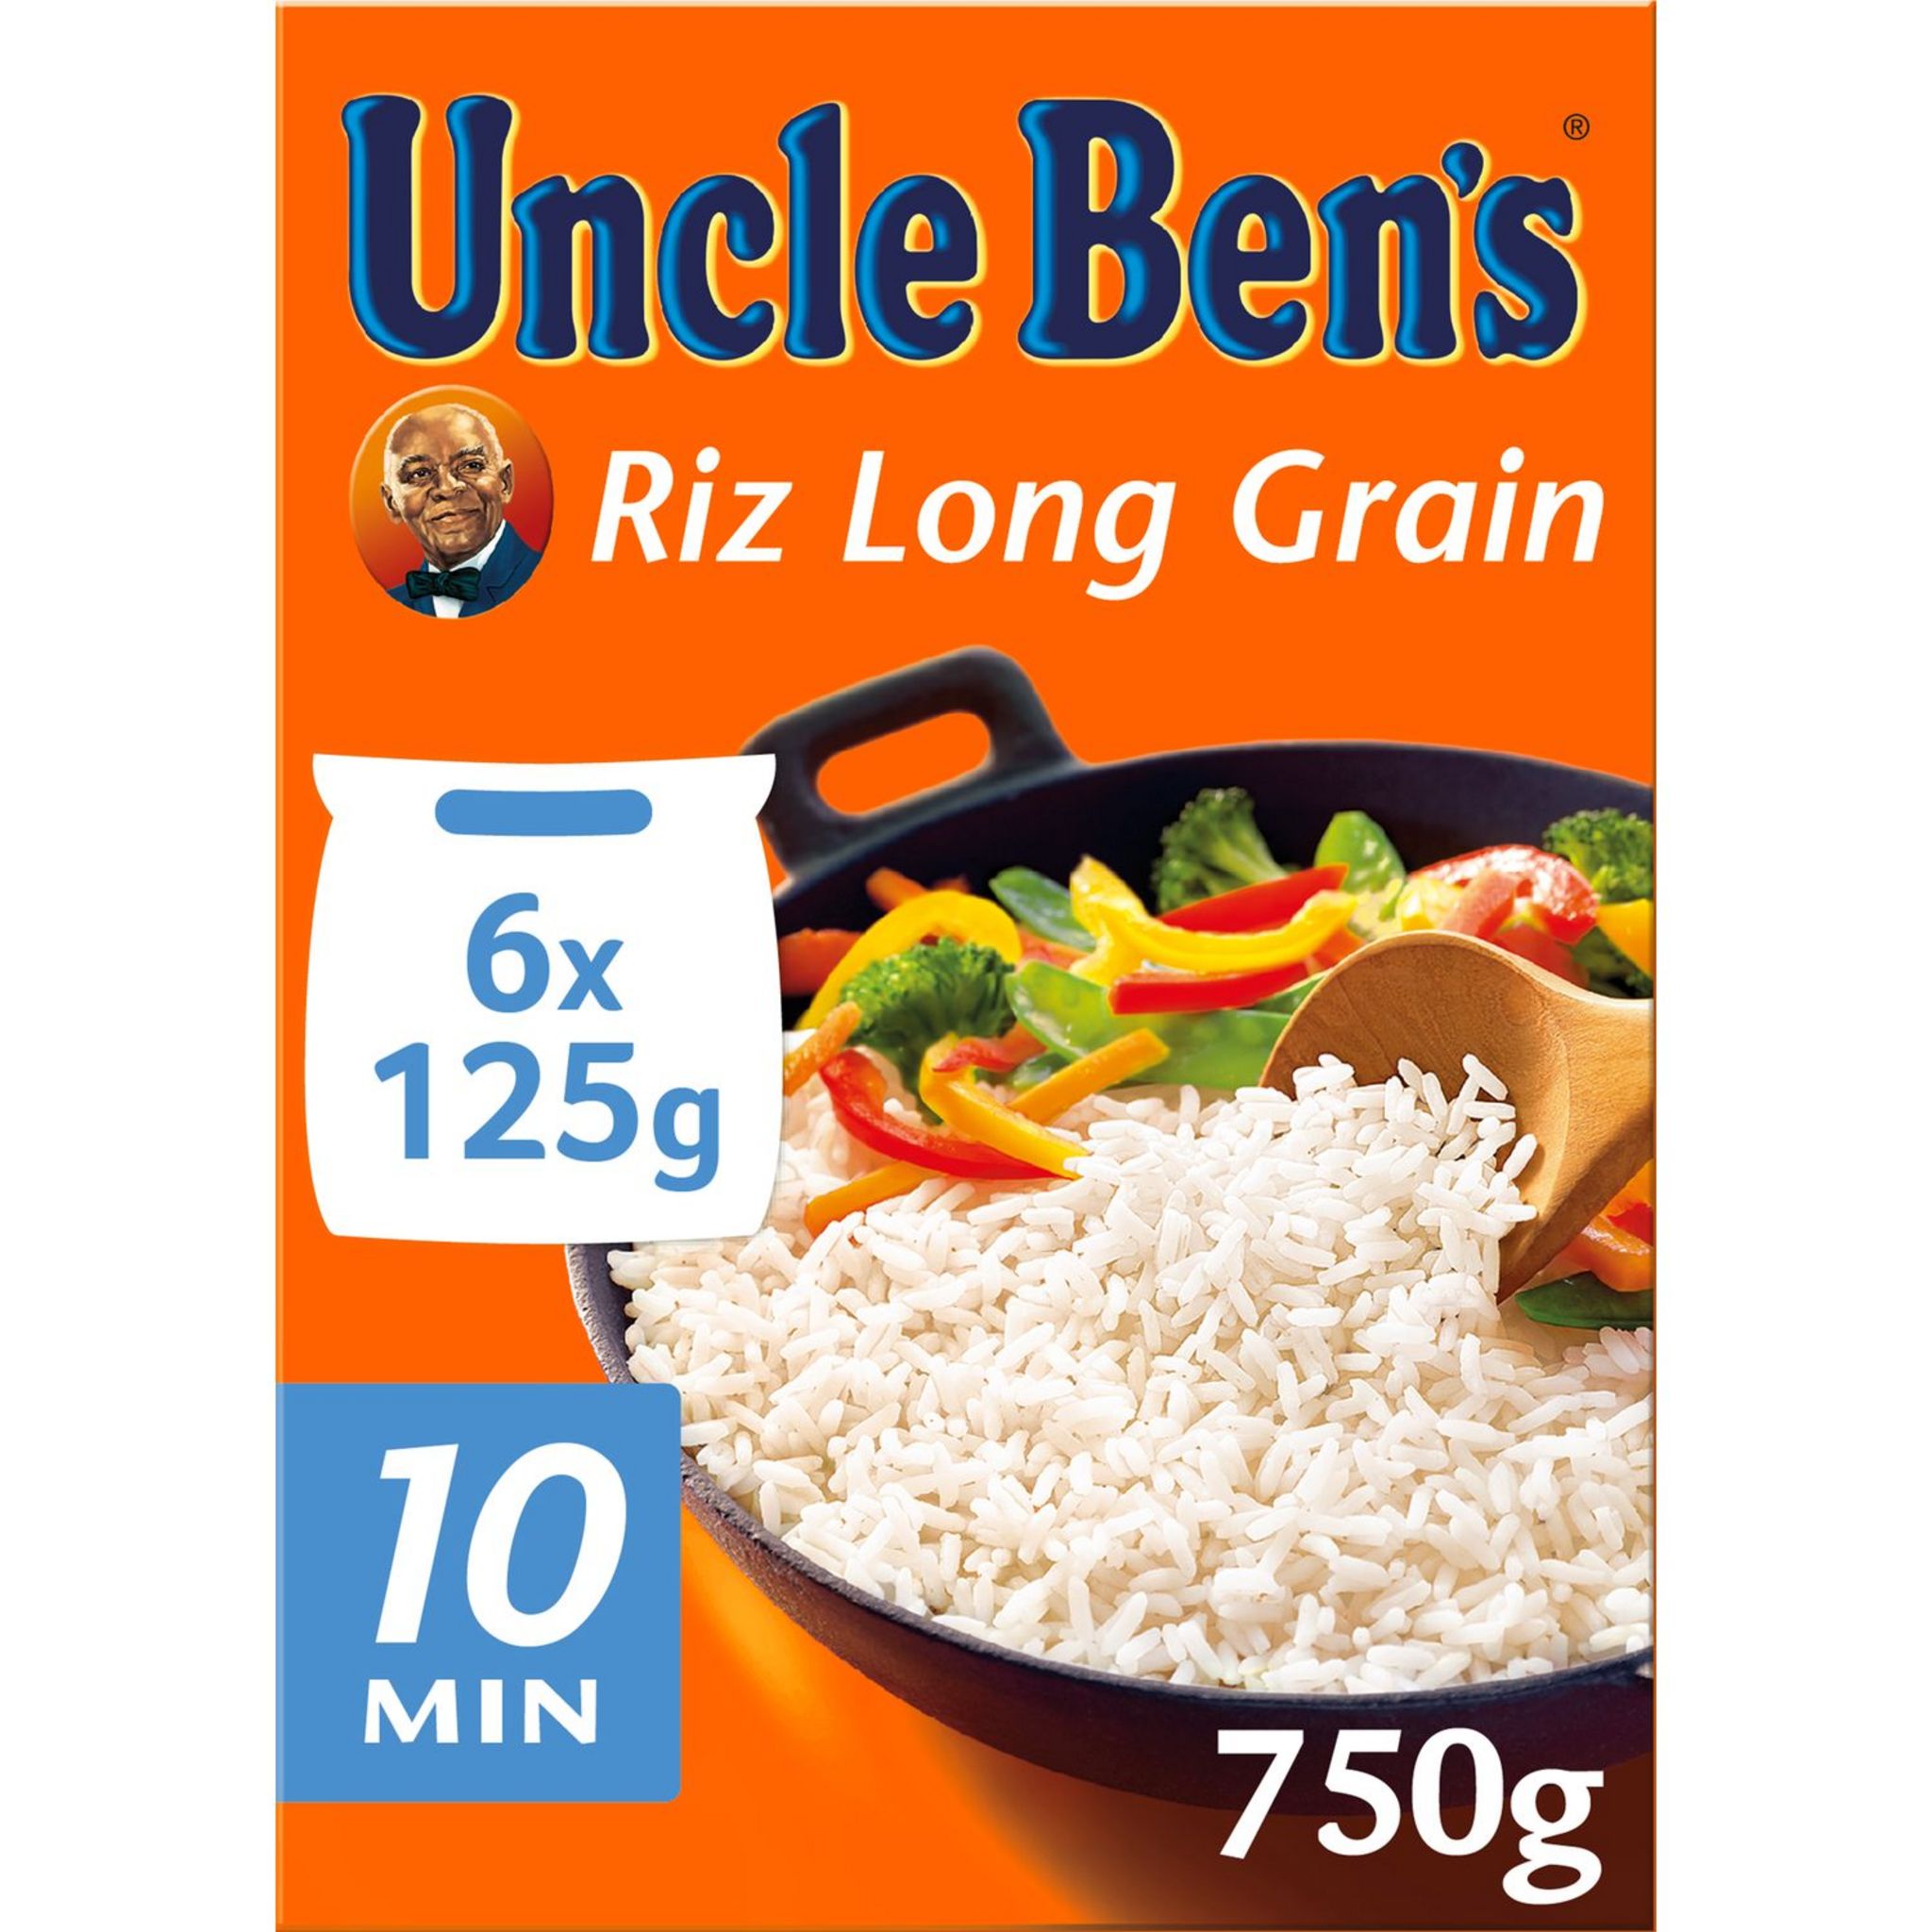 Promo Ben's original riz long grain chez Casino Supermarchés